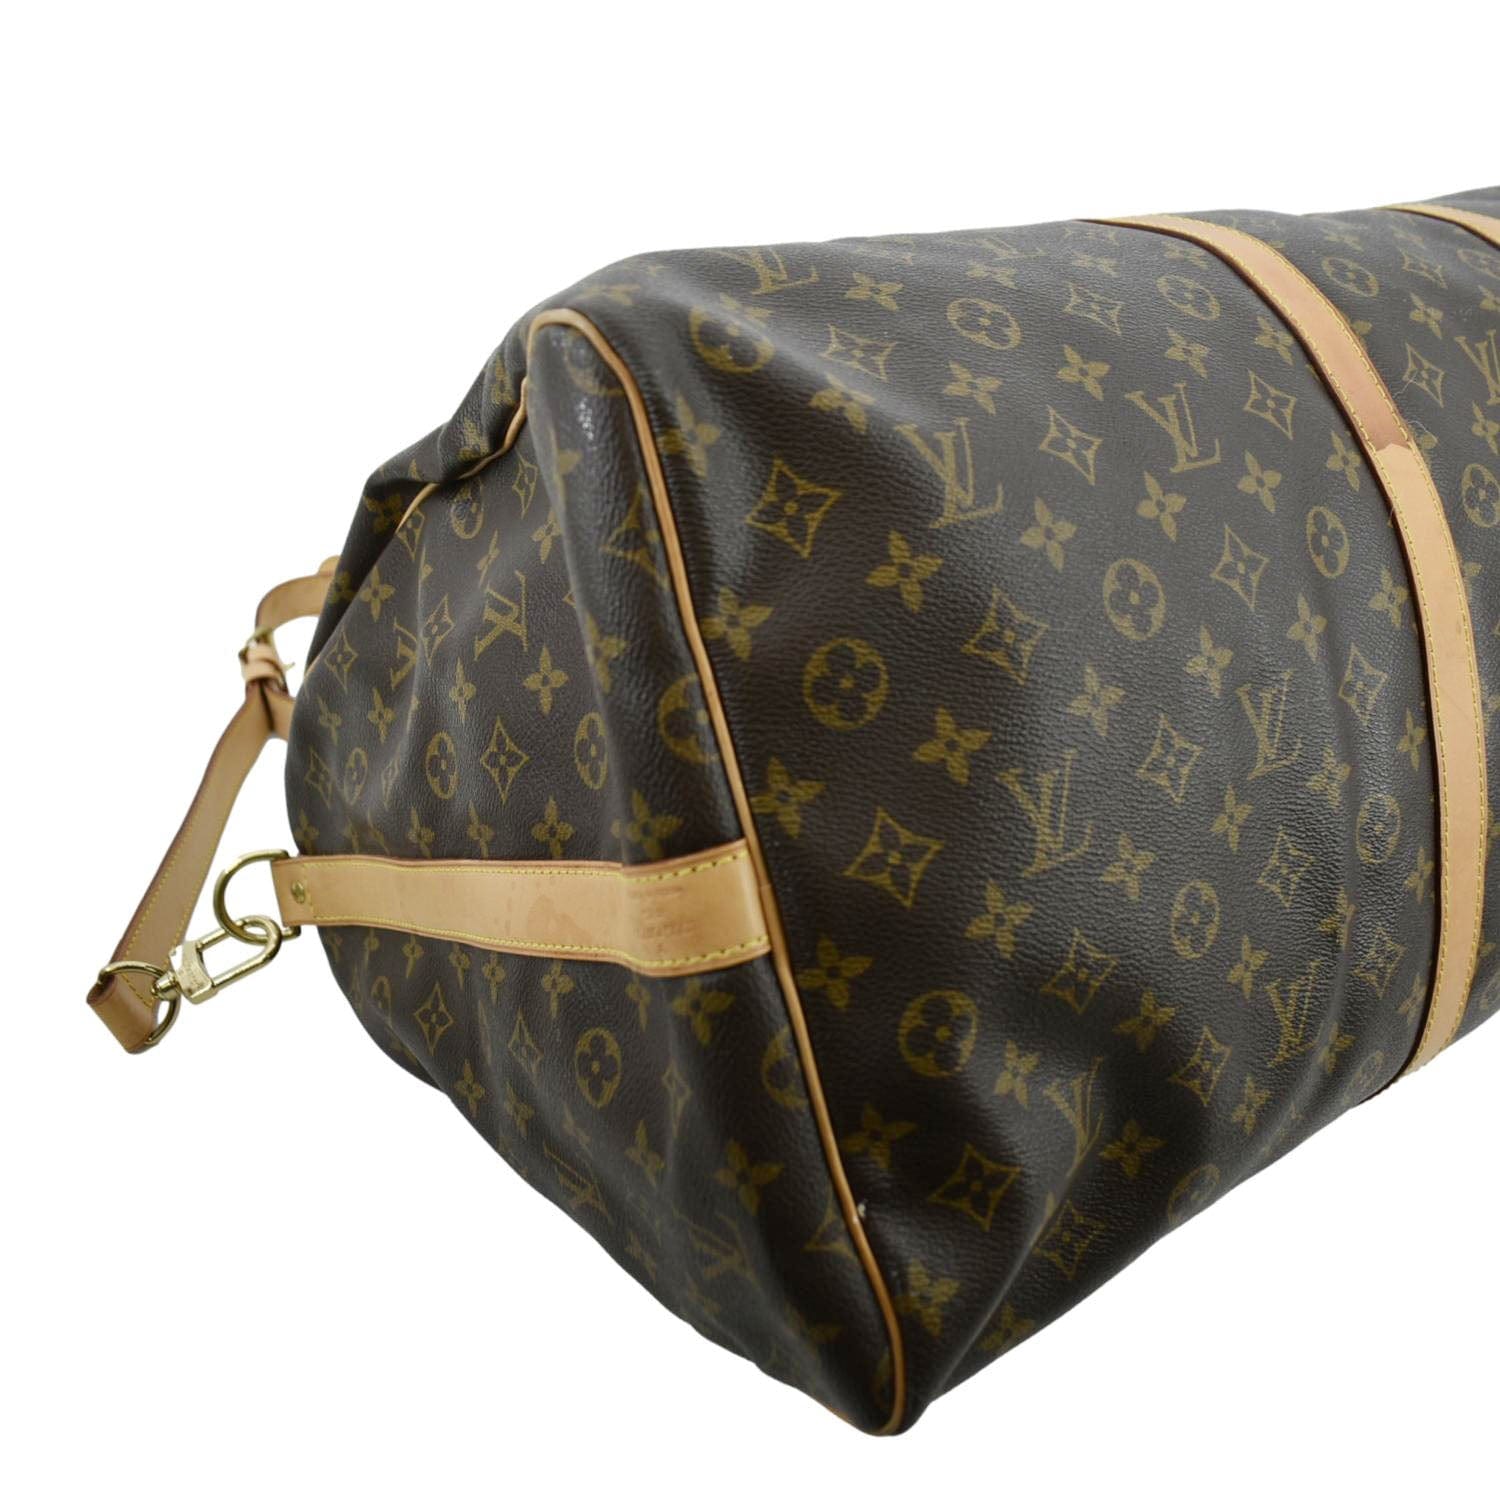 Vintage Louis Vuitton Keepall 60 Duffle Bag, Brown Monogram Canvas Bag